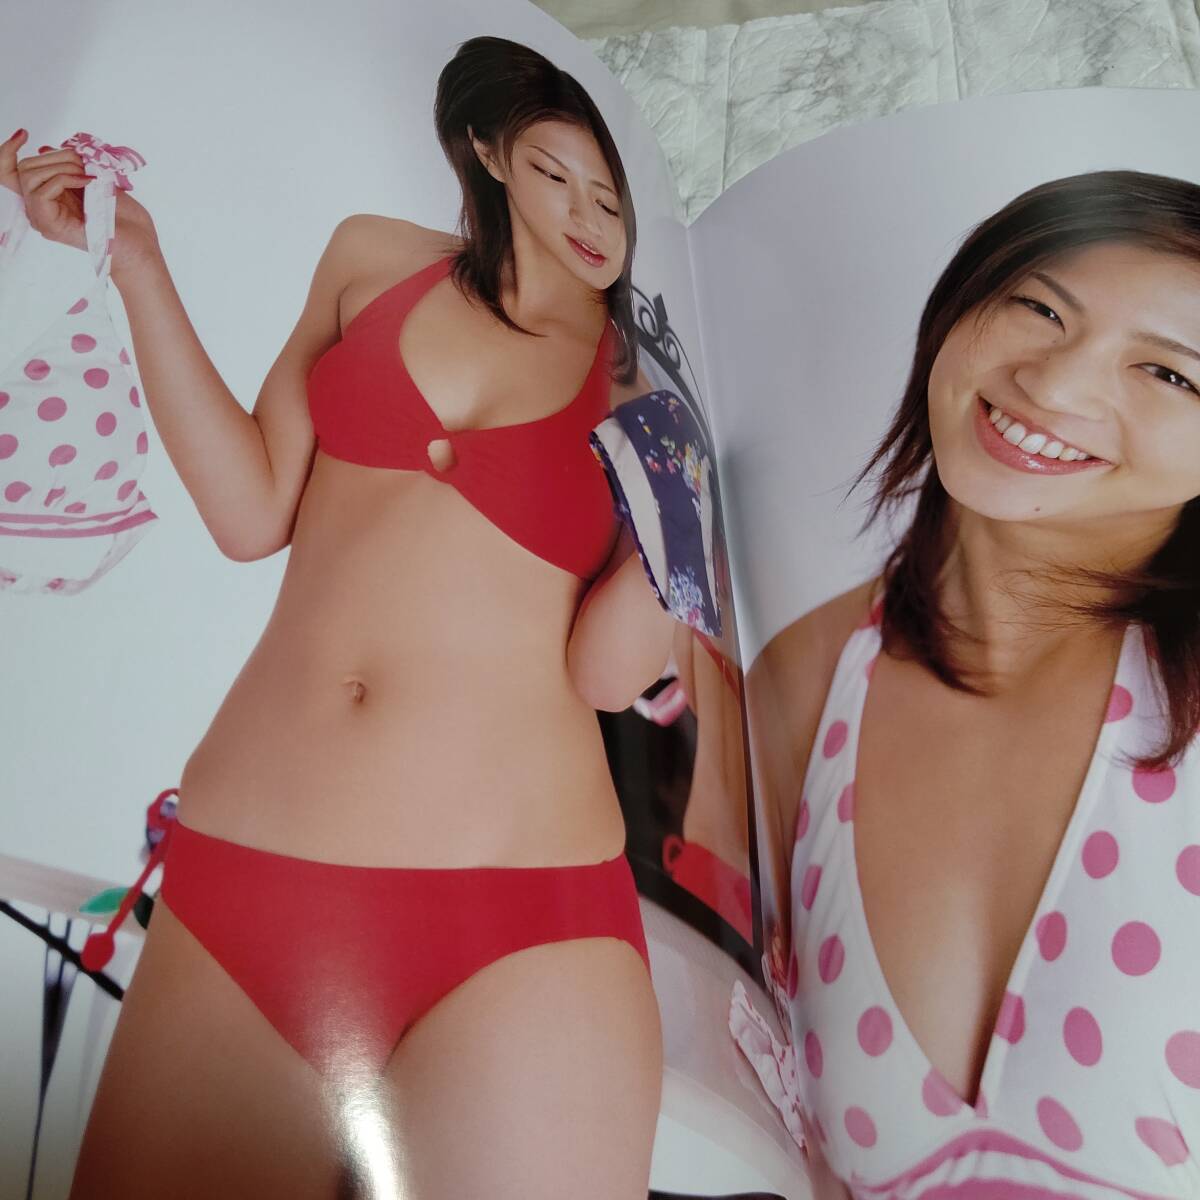  photoalbum Yasuda Misako photoalbum ........ prompt decision free shipping bikini model swimsuit bikini underwear 